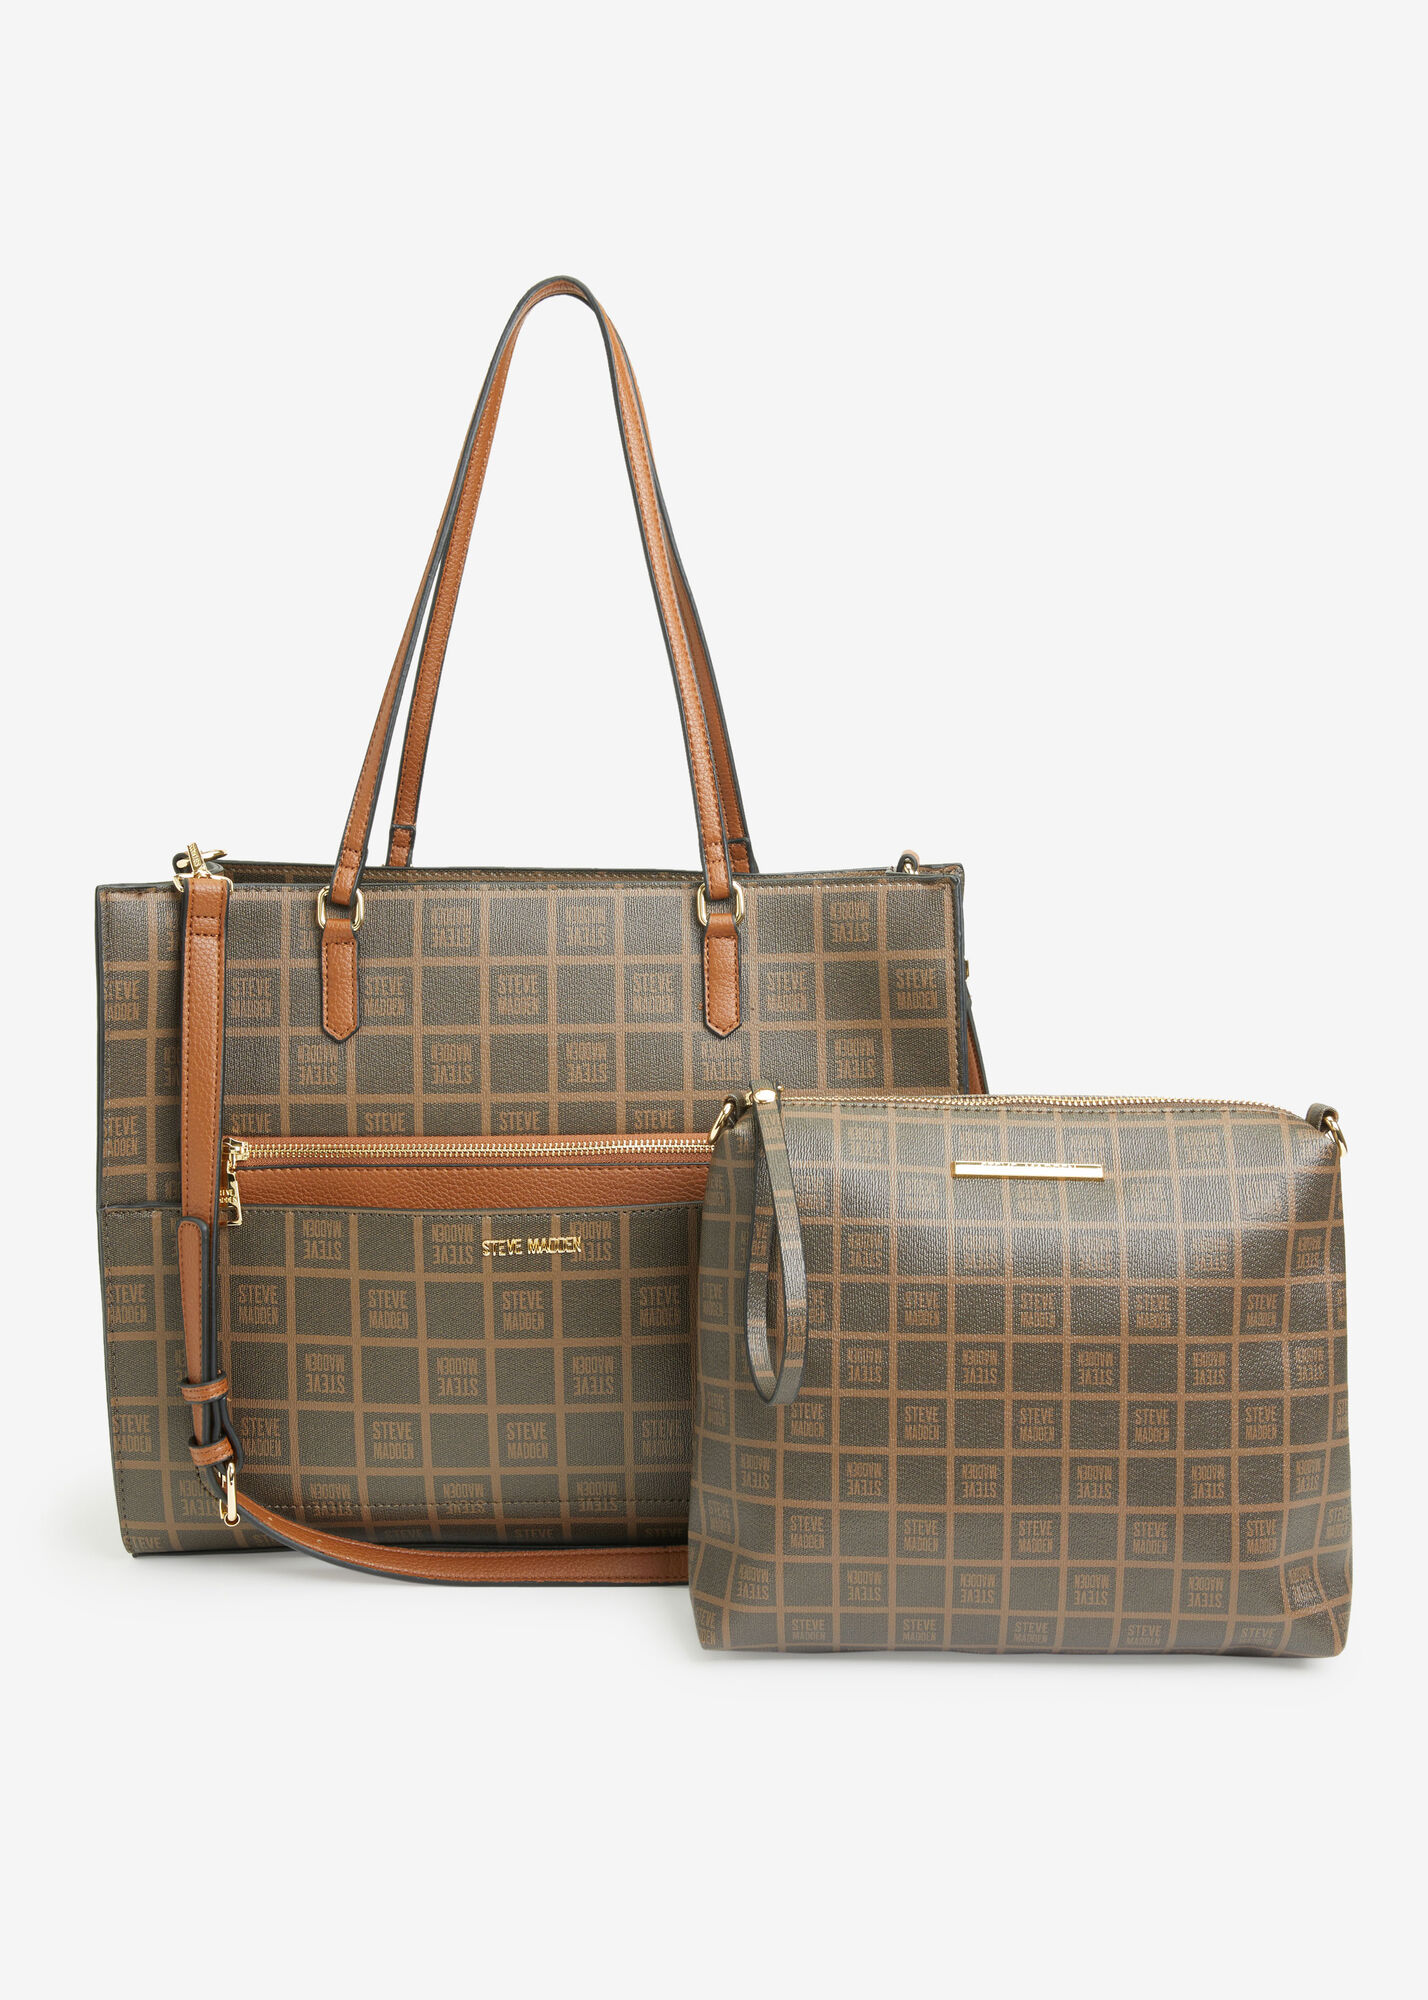 Help in ID this Steve Madden bag?! : r/handbags